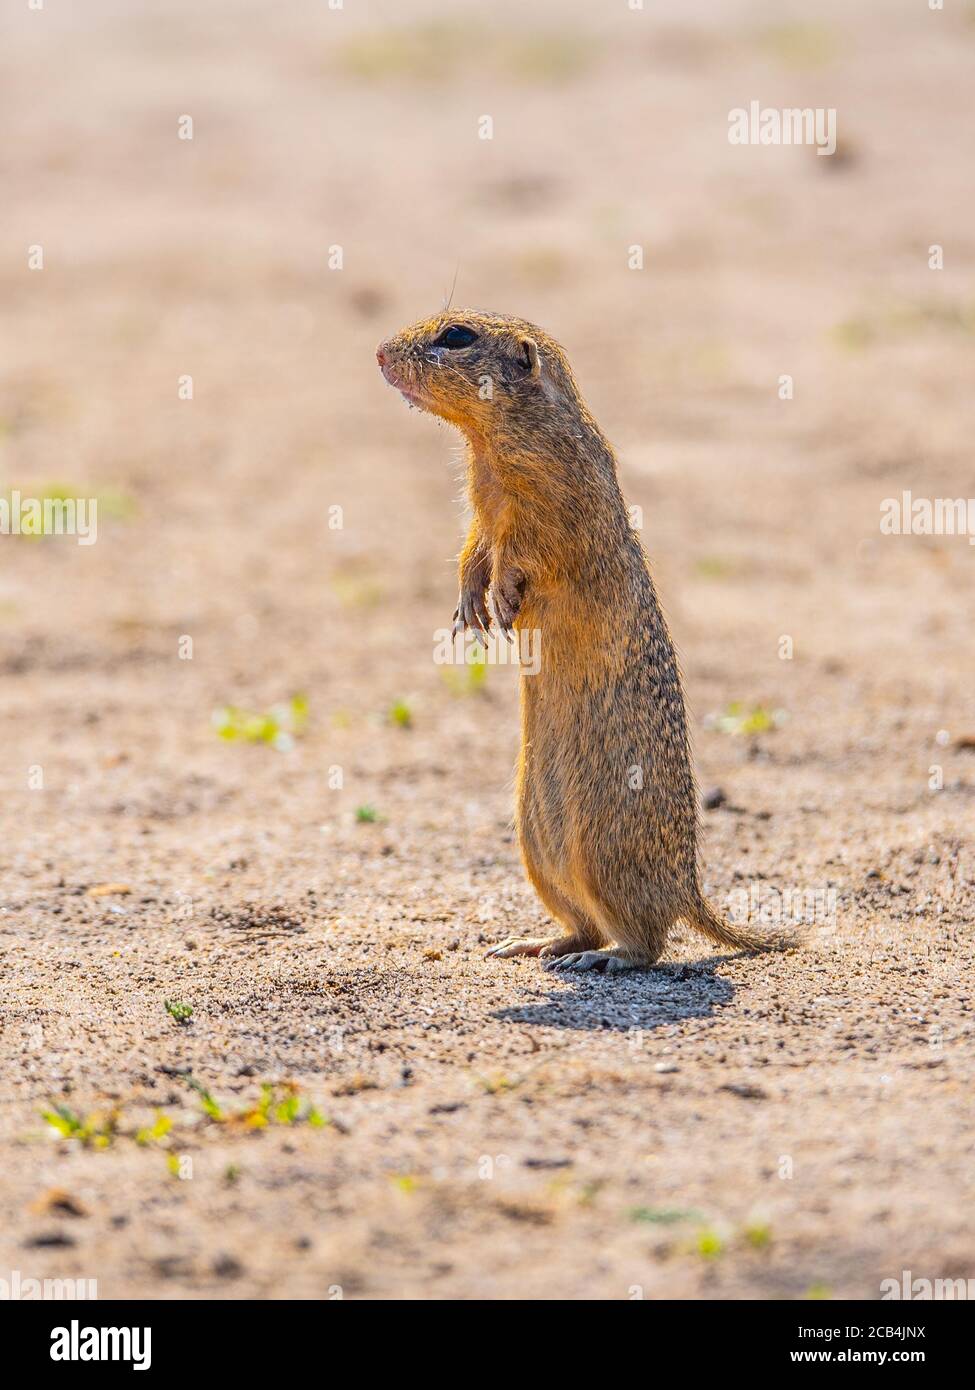 European ground squirrel, Spermophilus citellus, aka European souslik. Small cute rodent in natural habitat sitting on its hind legs. Stock Photo